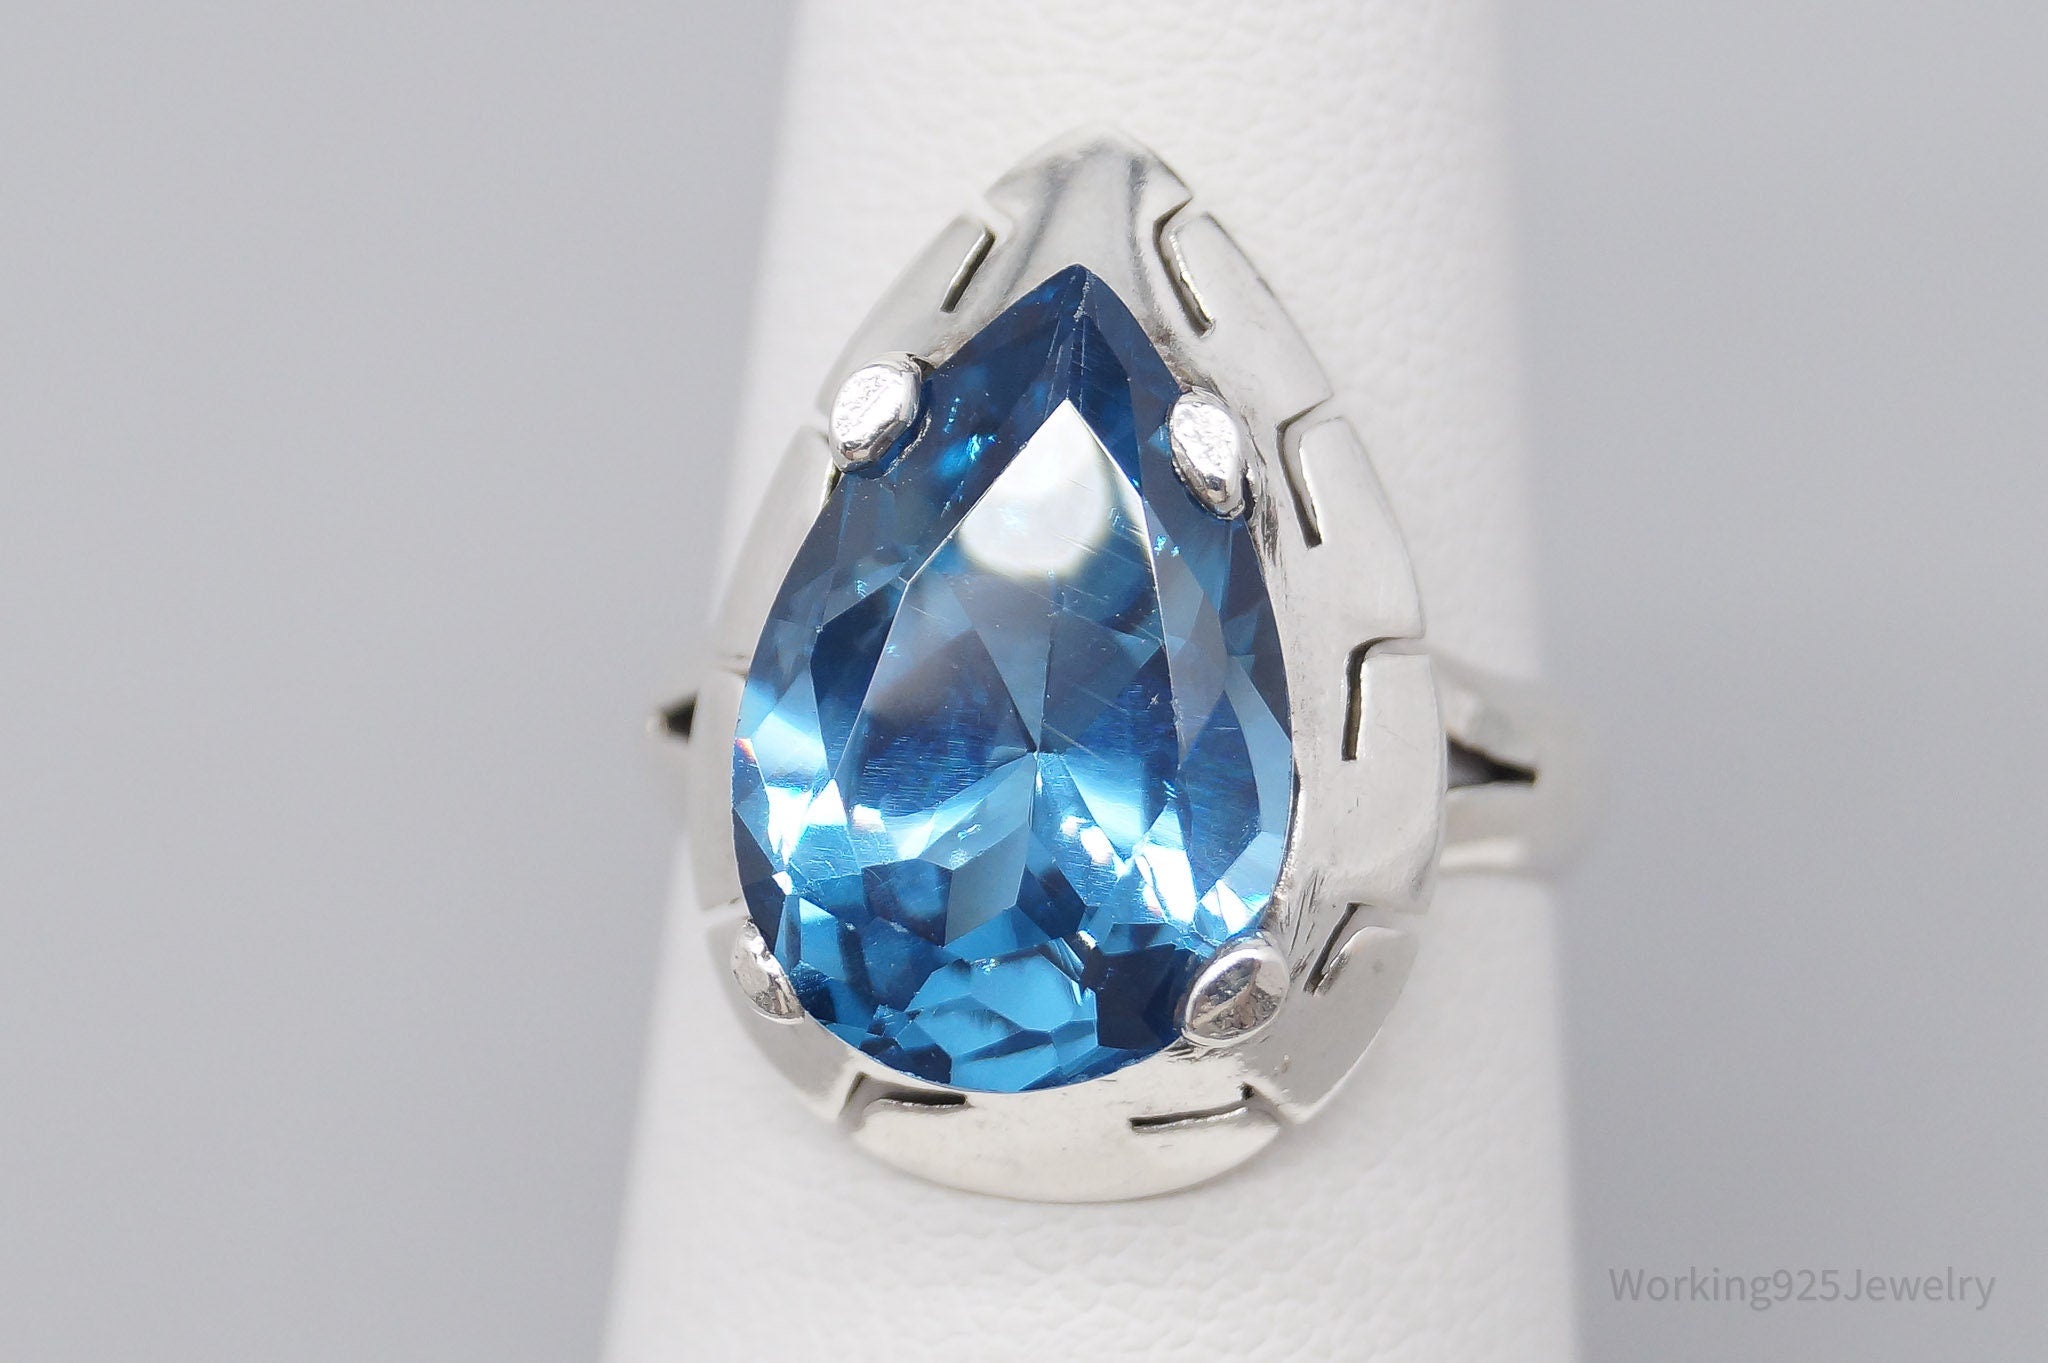 Vintage Large London Blue Topaz Sterling Silver Ring - Size 5.75